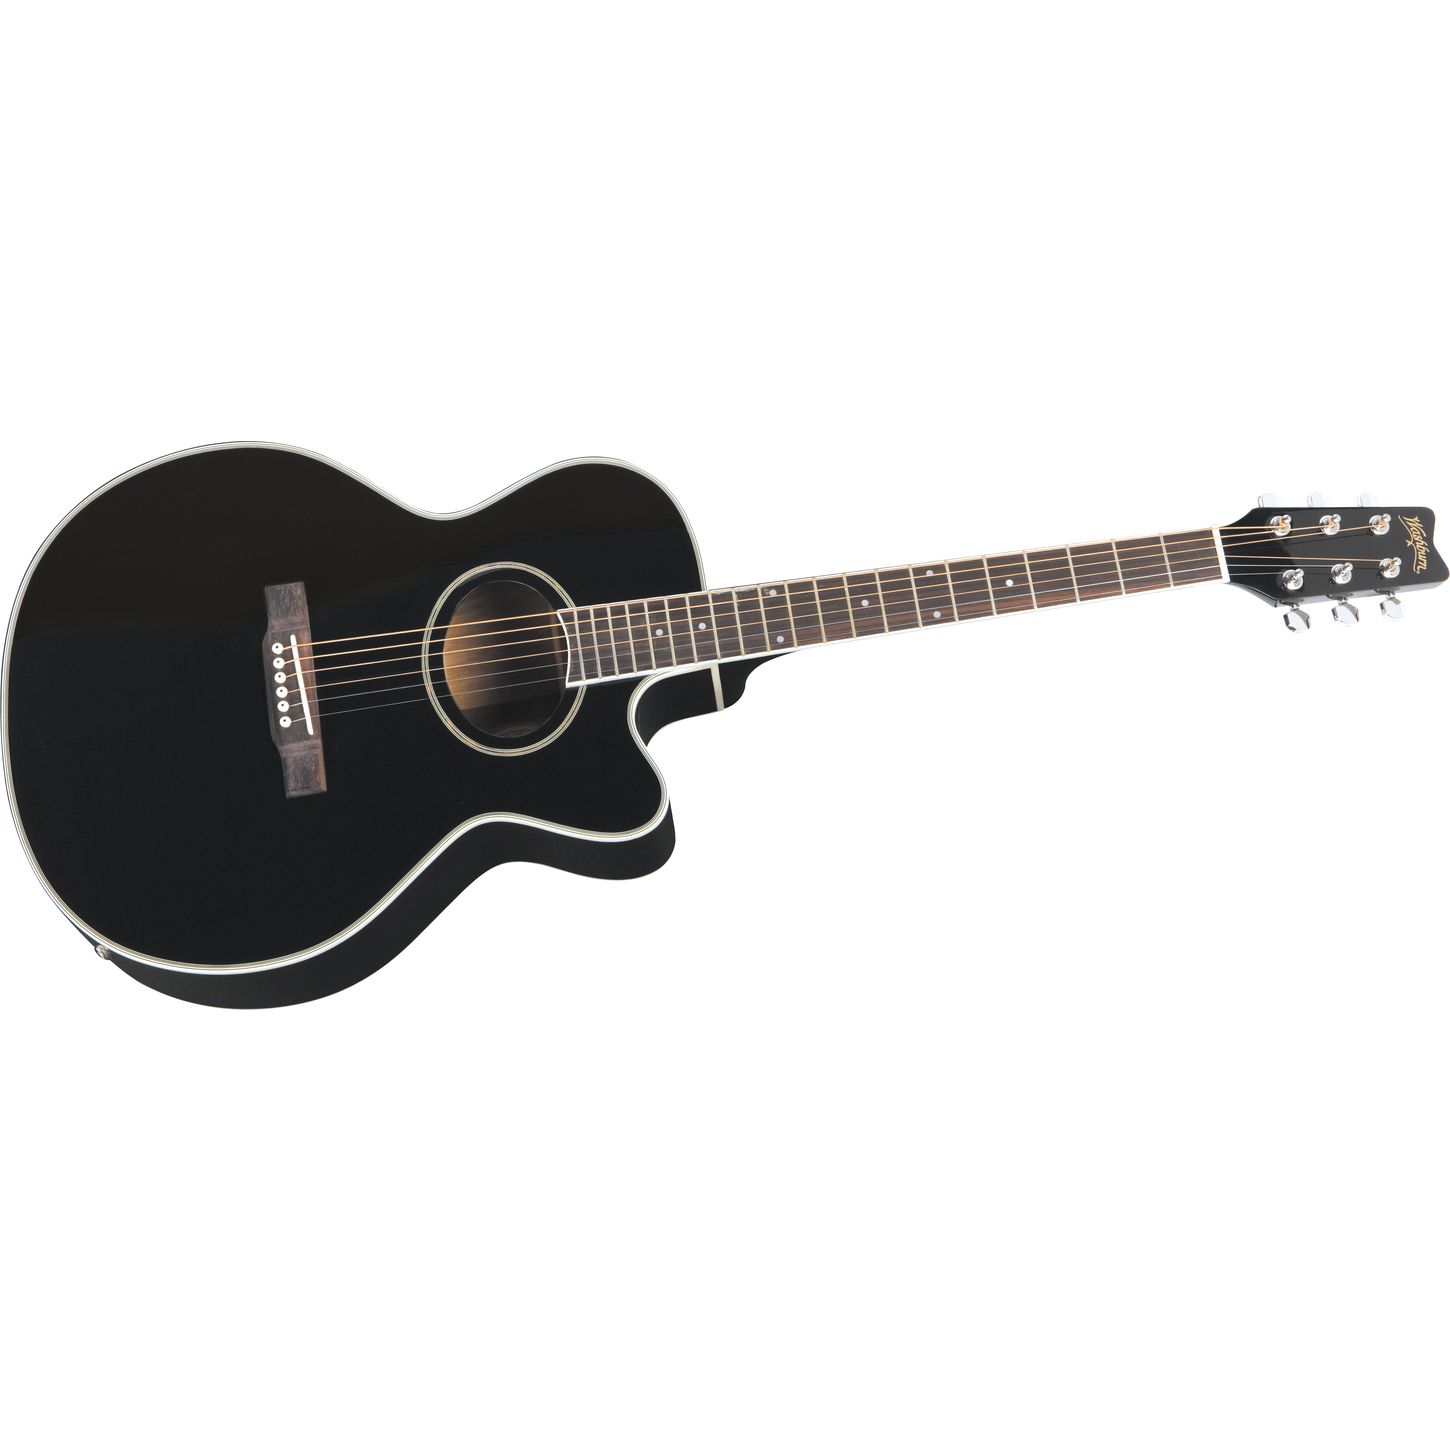 Cuánto vale esta guitarra? DV020_Jpg_Jumbo_511869.001_black_R